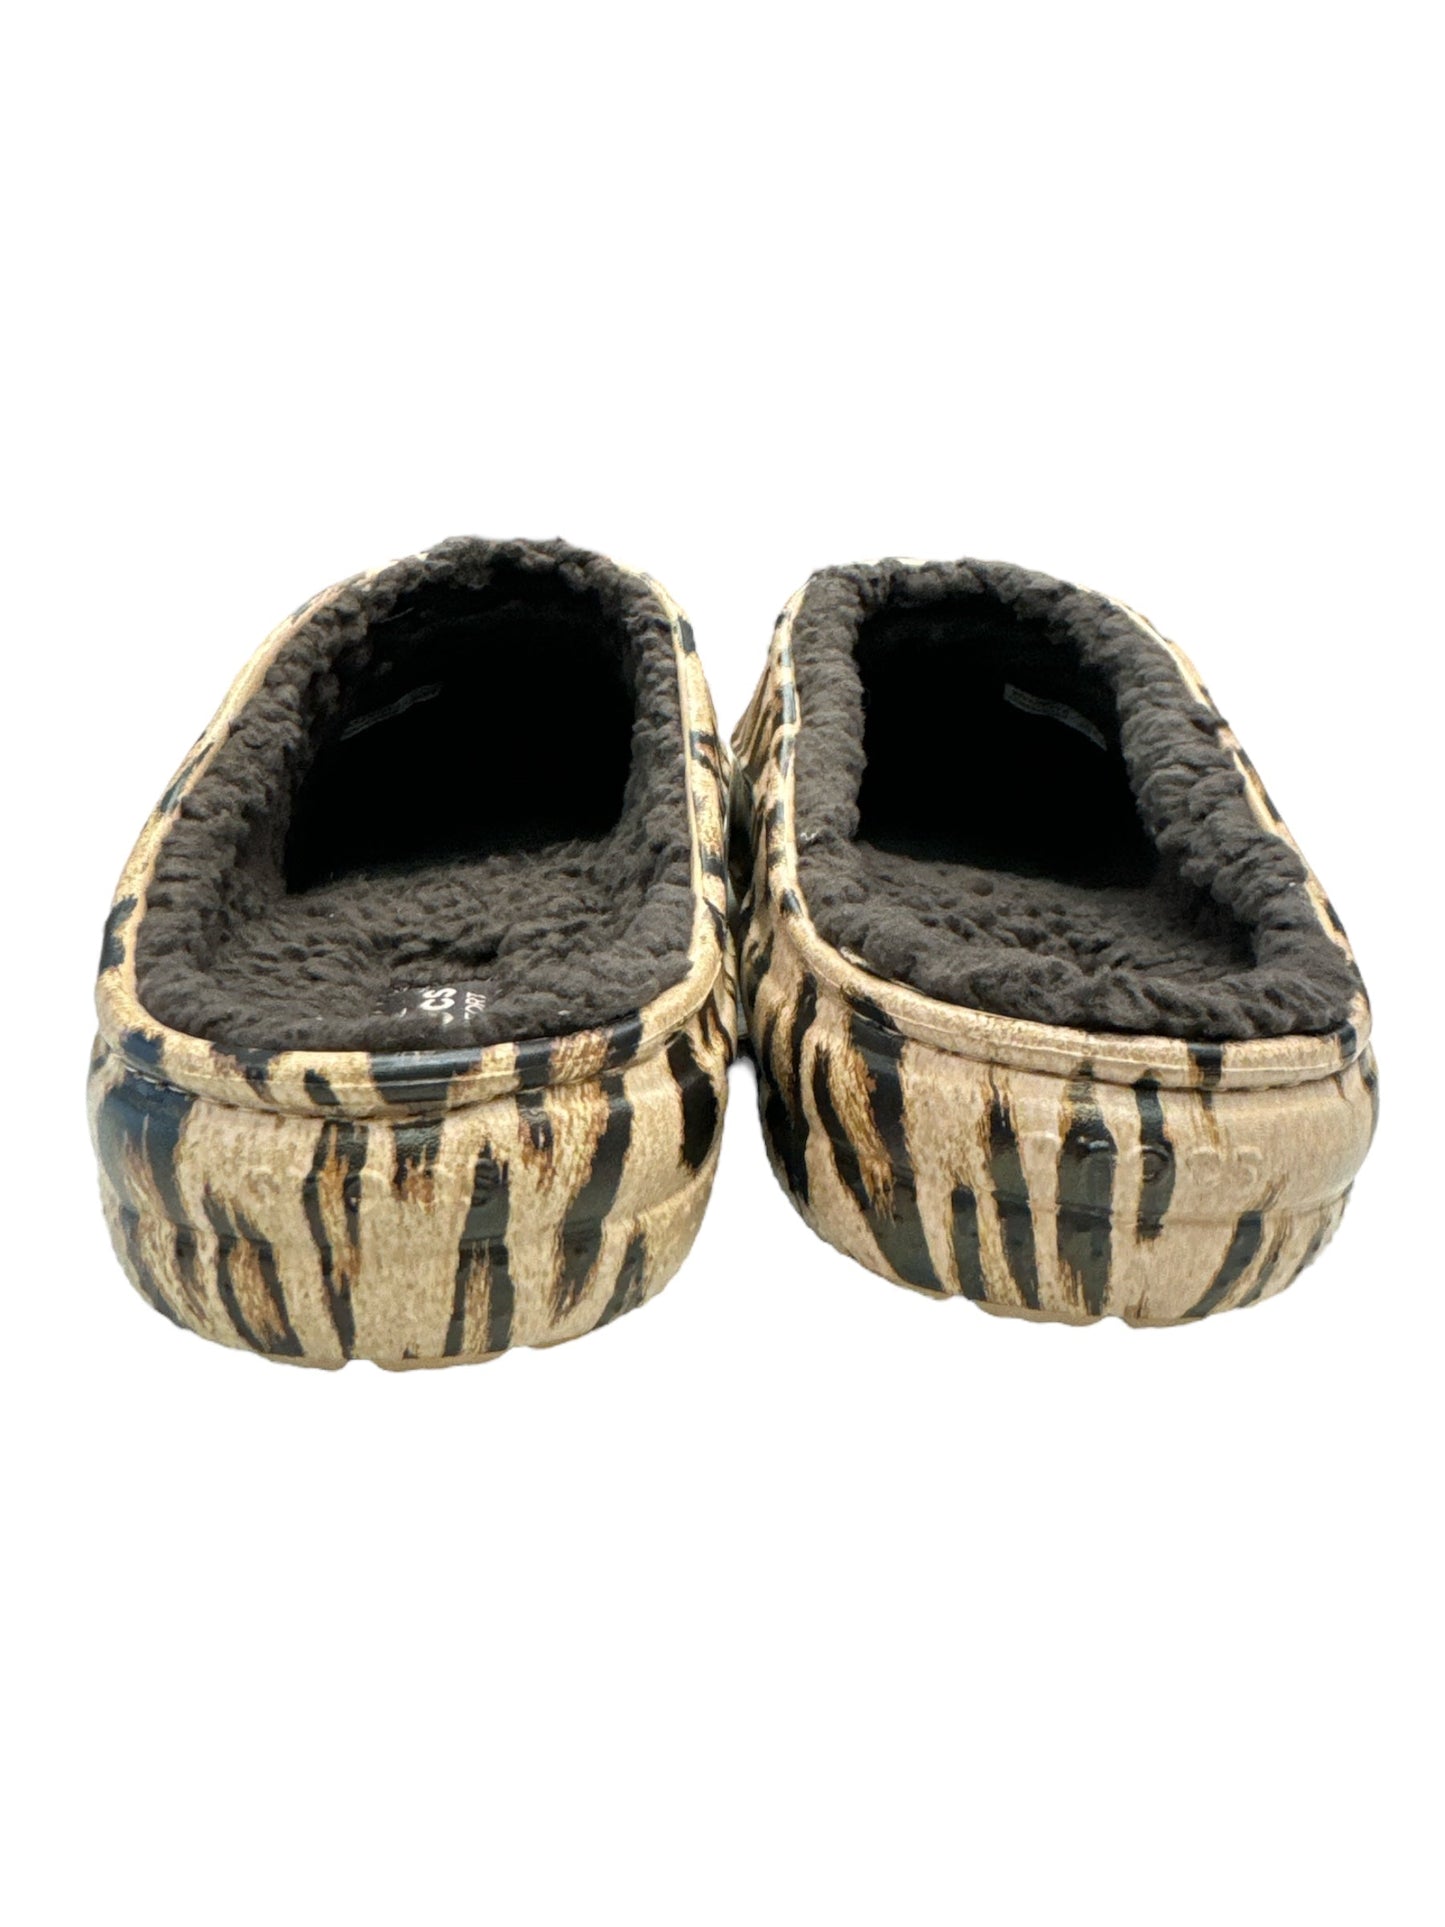 Animal Print Shoes Flats Crocs, Size 9